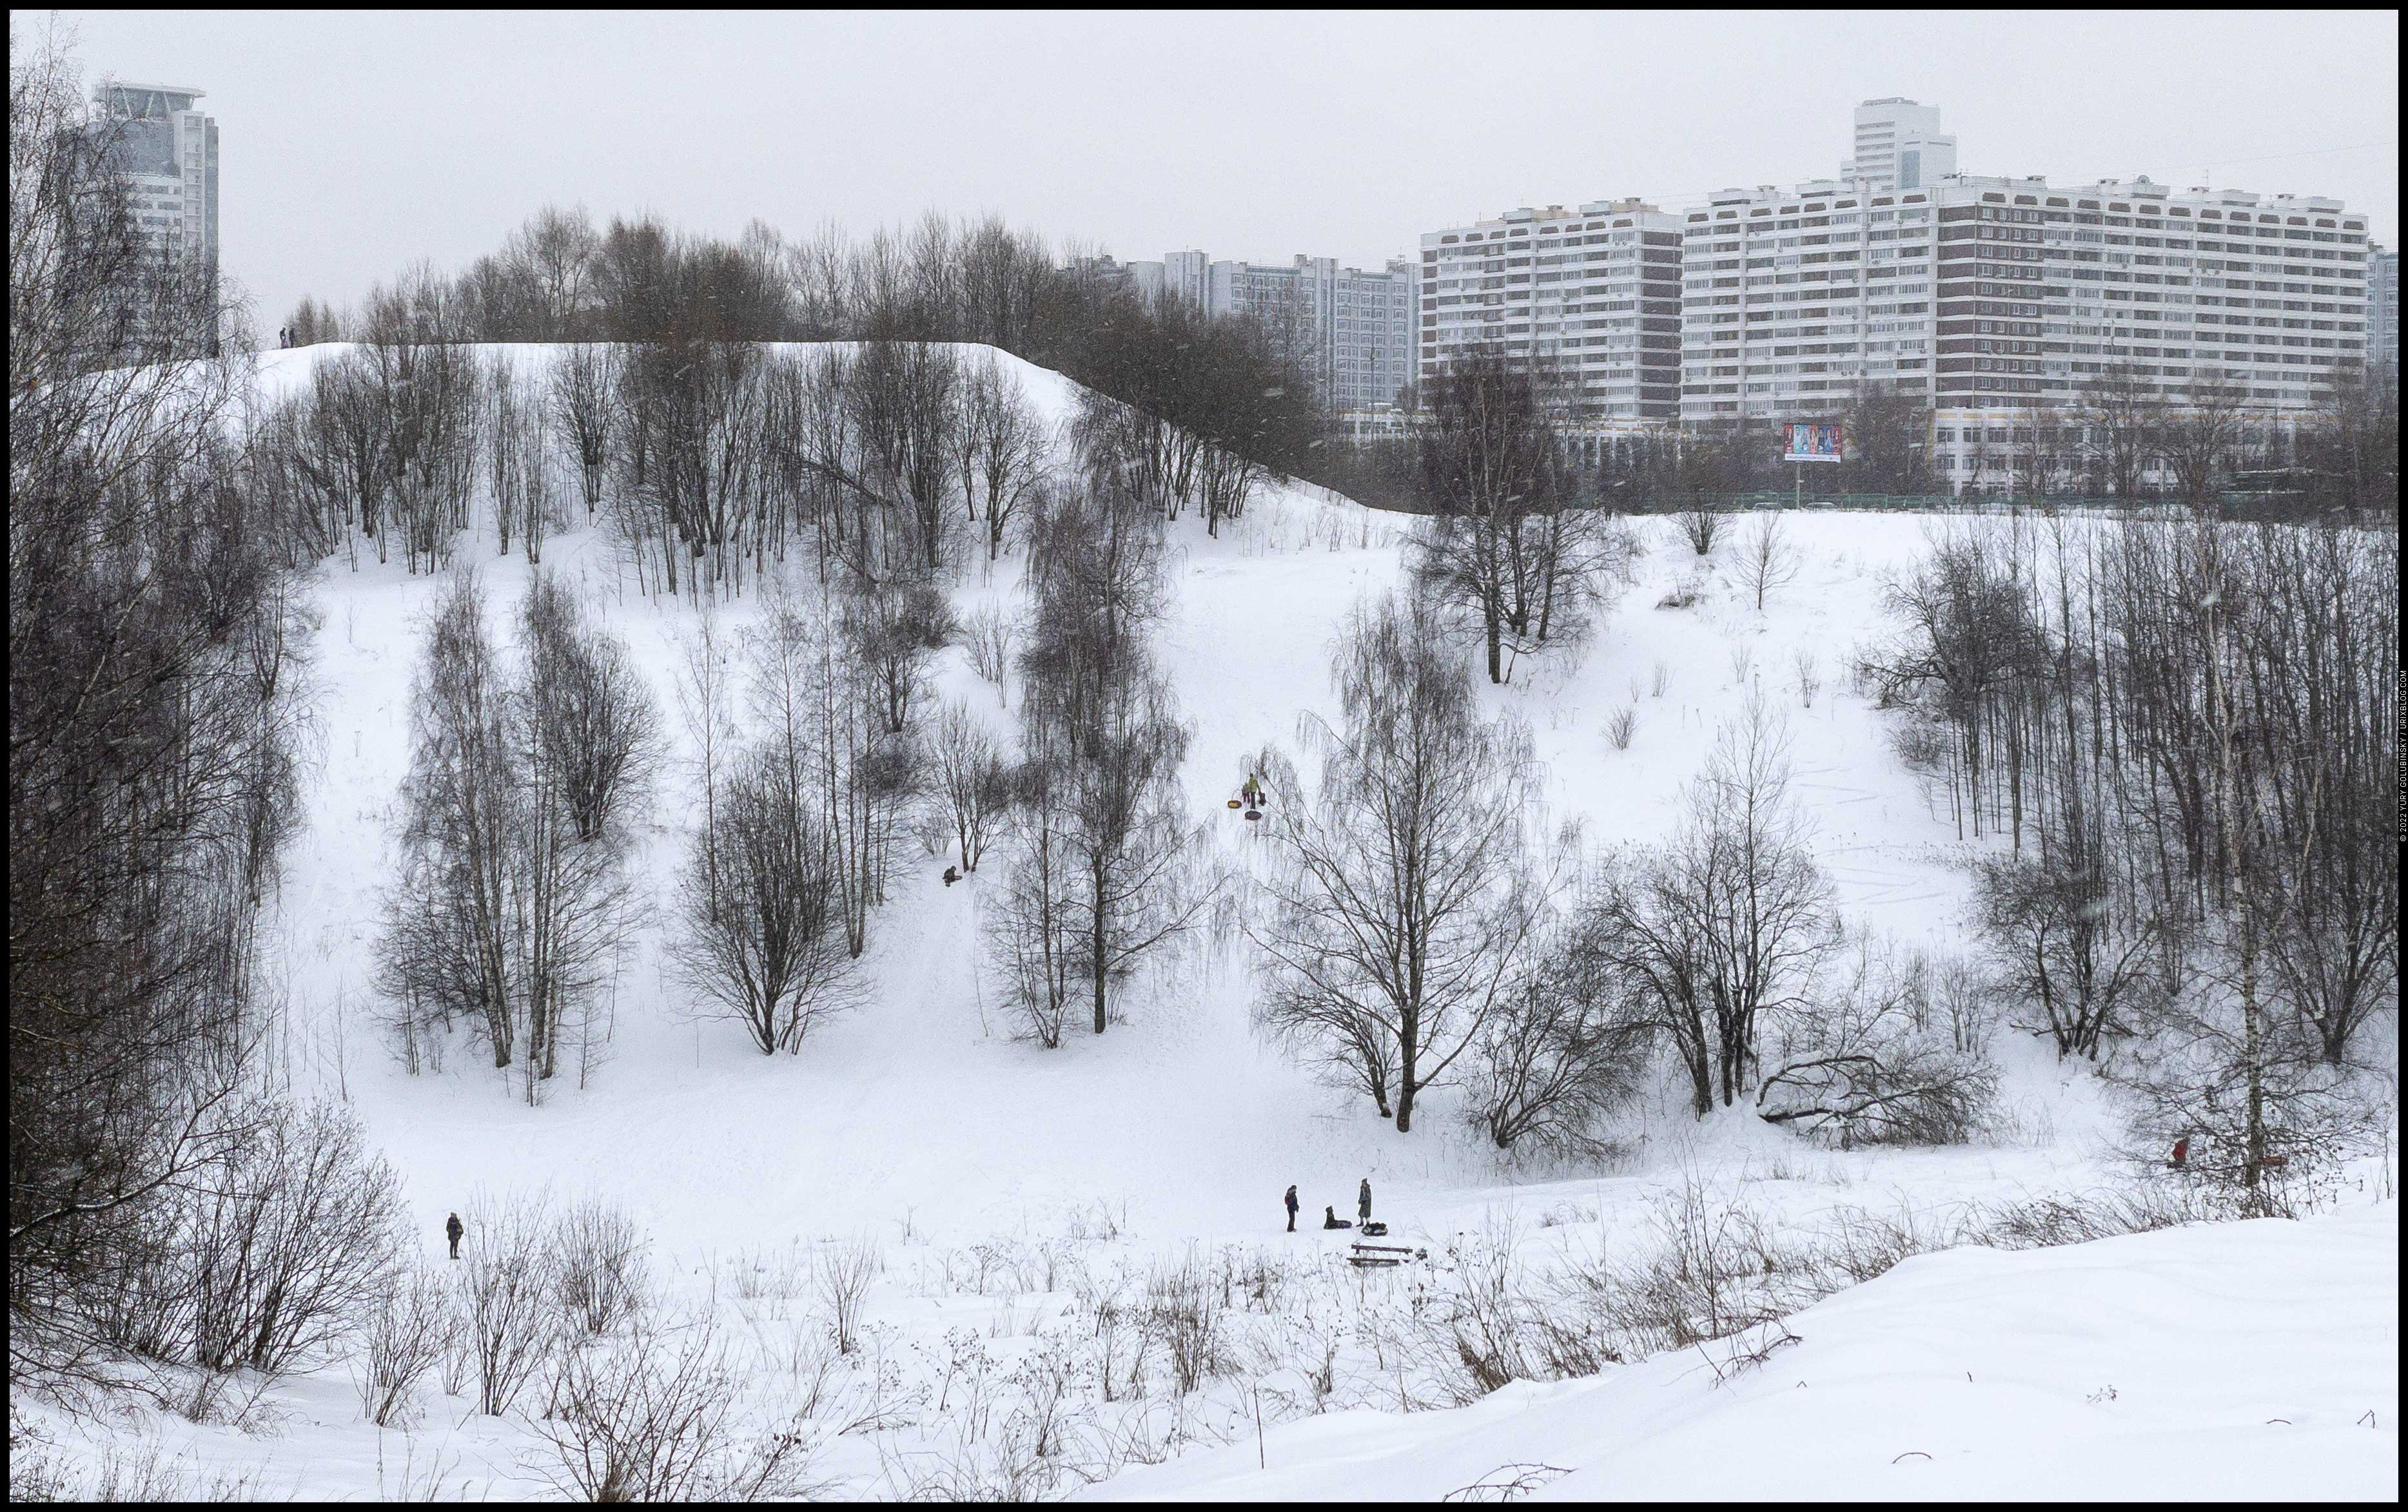 Krylatskiye Hills, Moscow, Russia, winter, hill, snow, park, trees